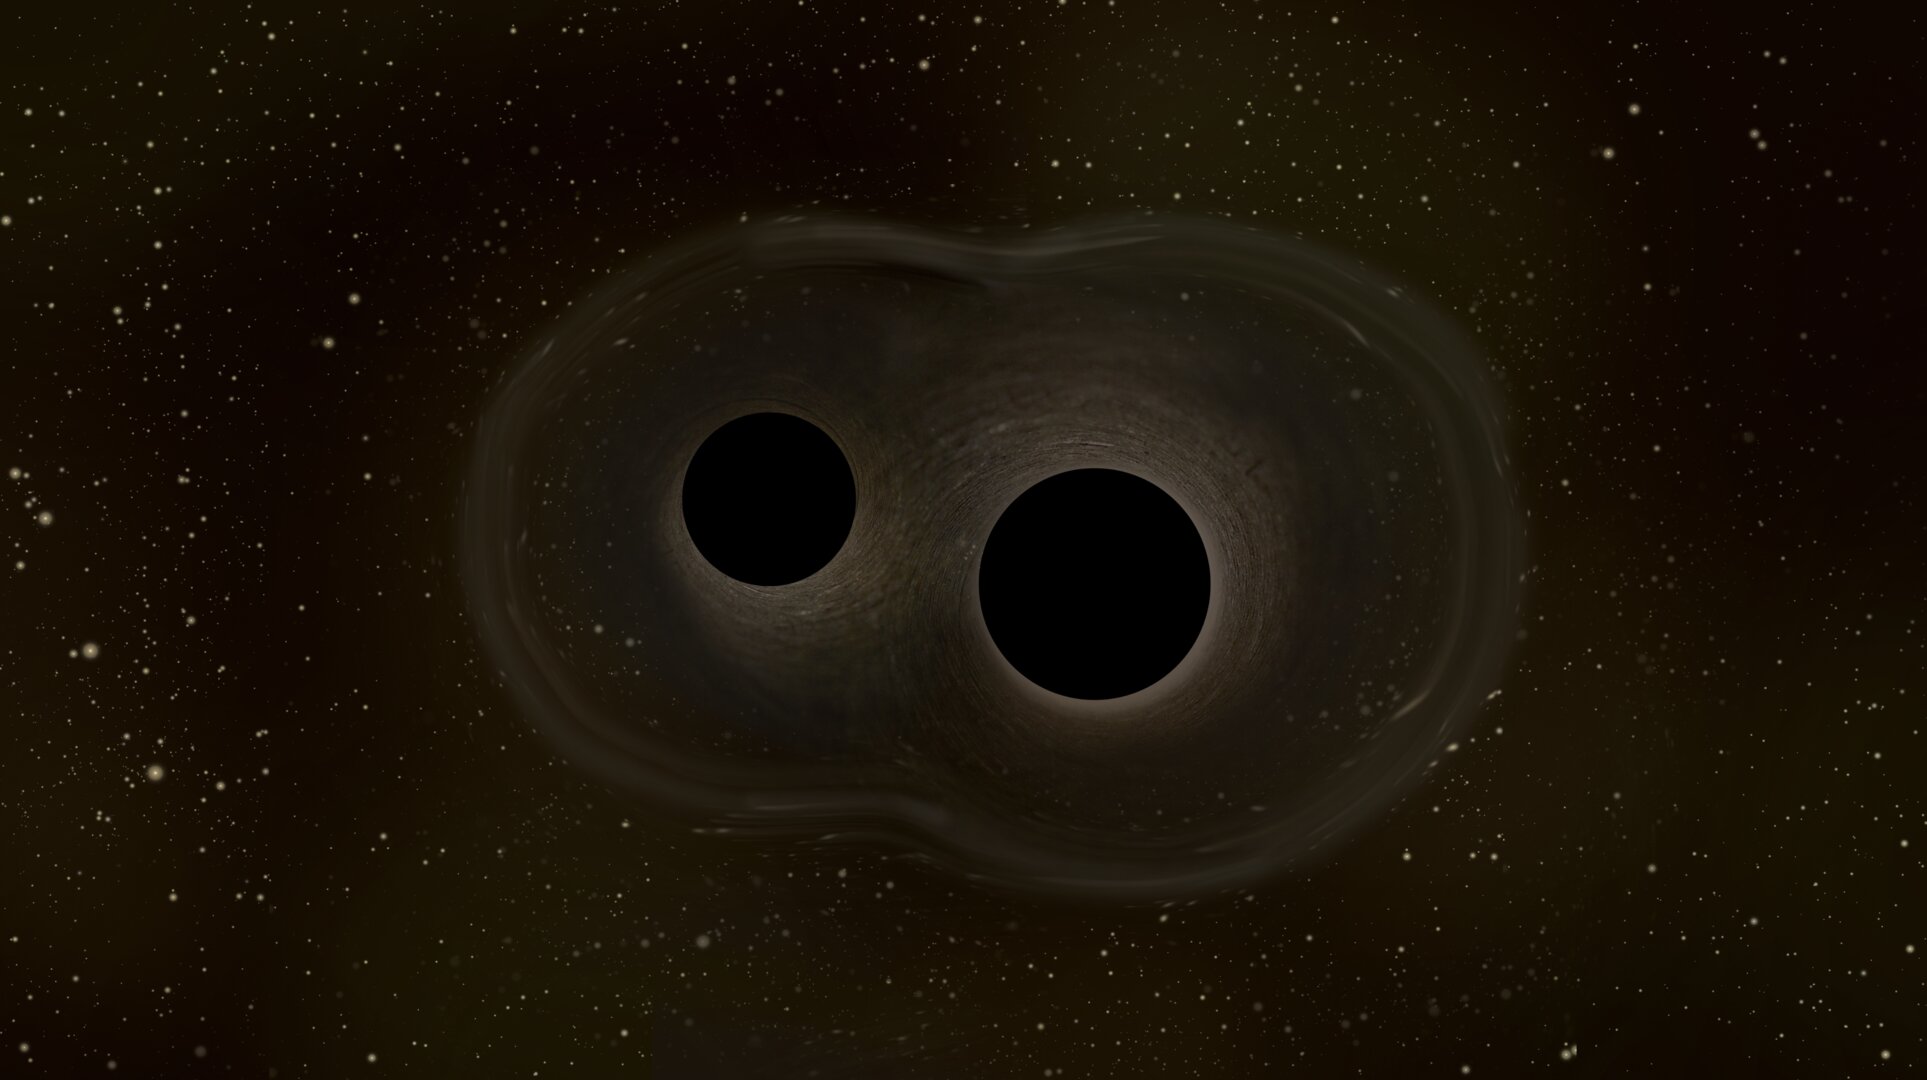 Two merging black holes